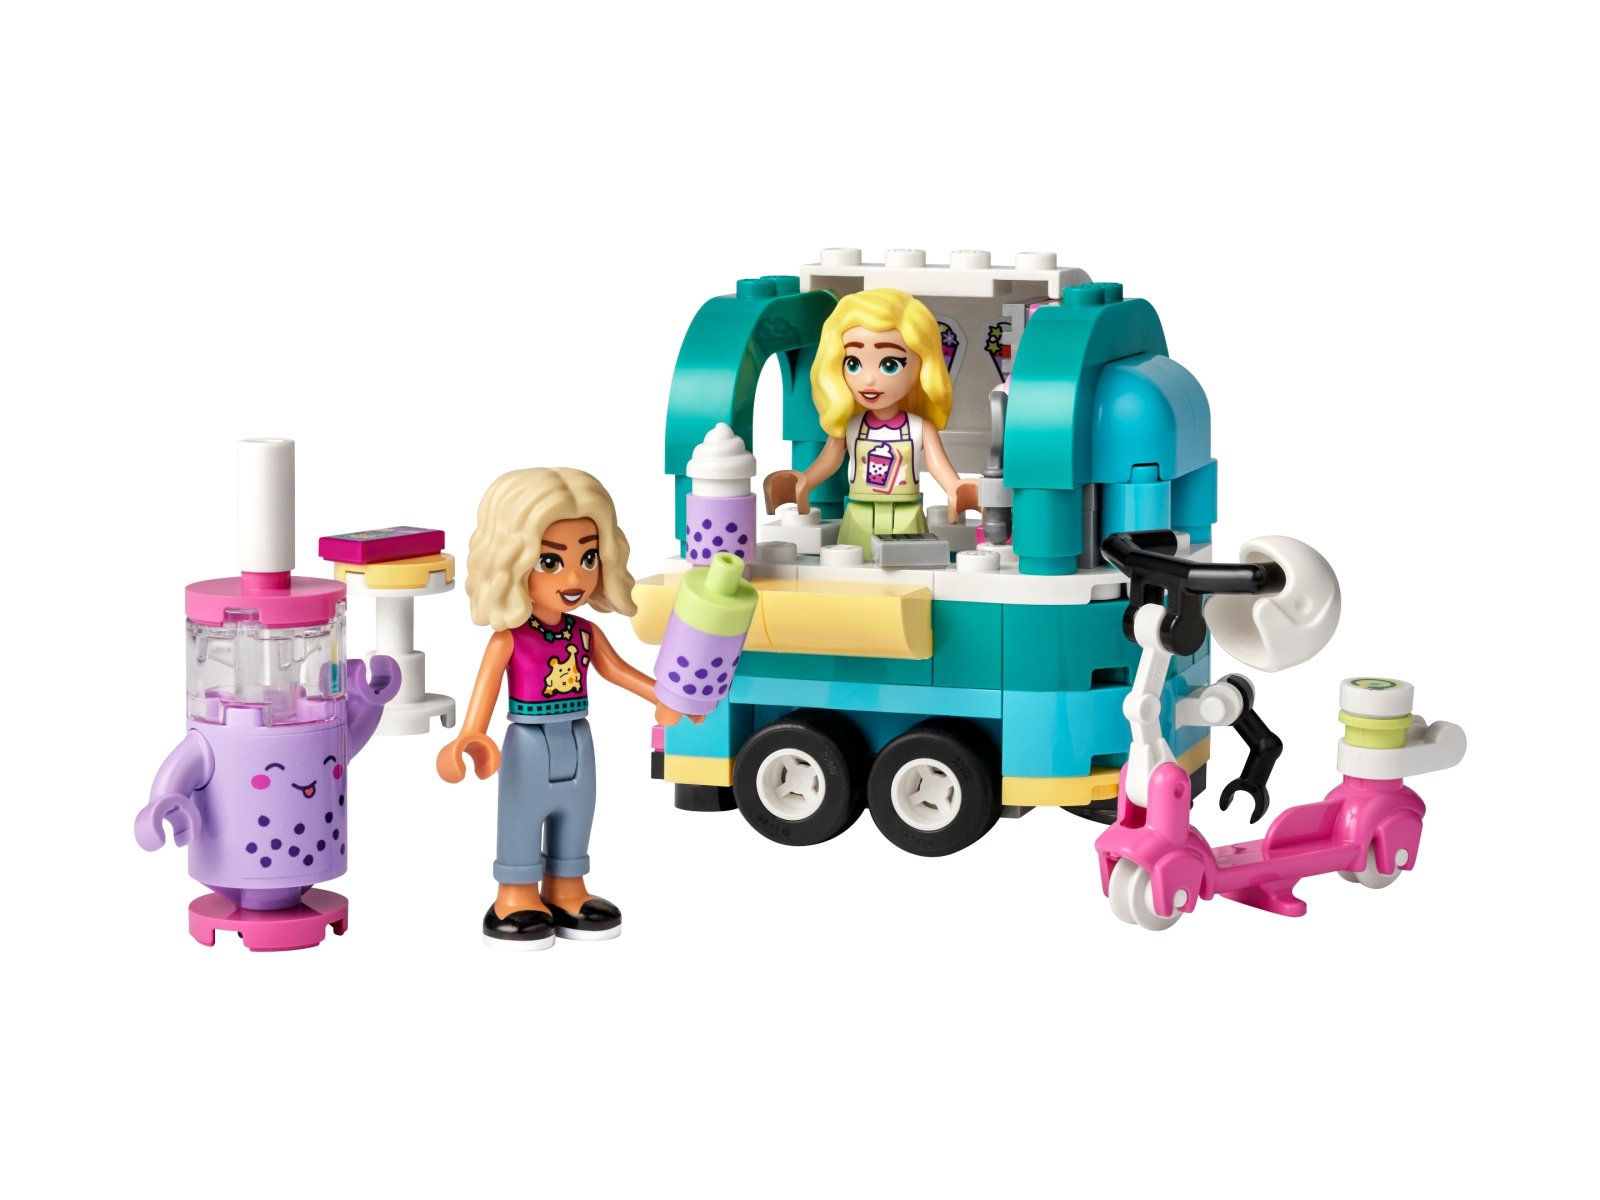 LEGO Friends Mobilny sklep z bubble tea 41733